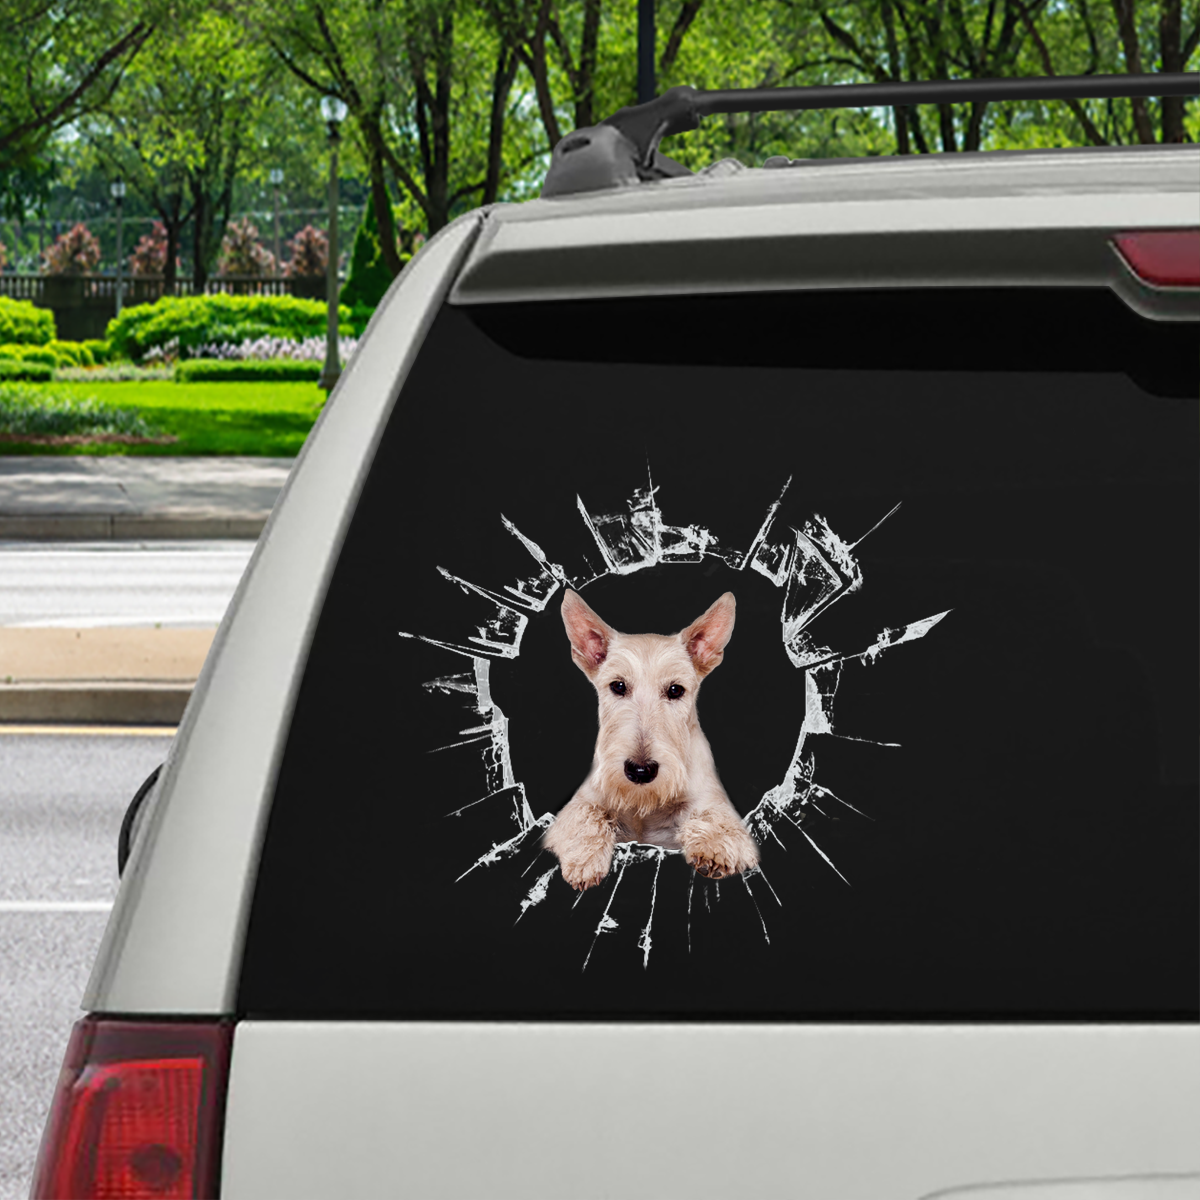 Get In - It's Time For Shopping - Scottish Terrier Car Sticker V1